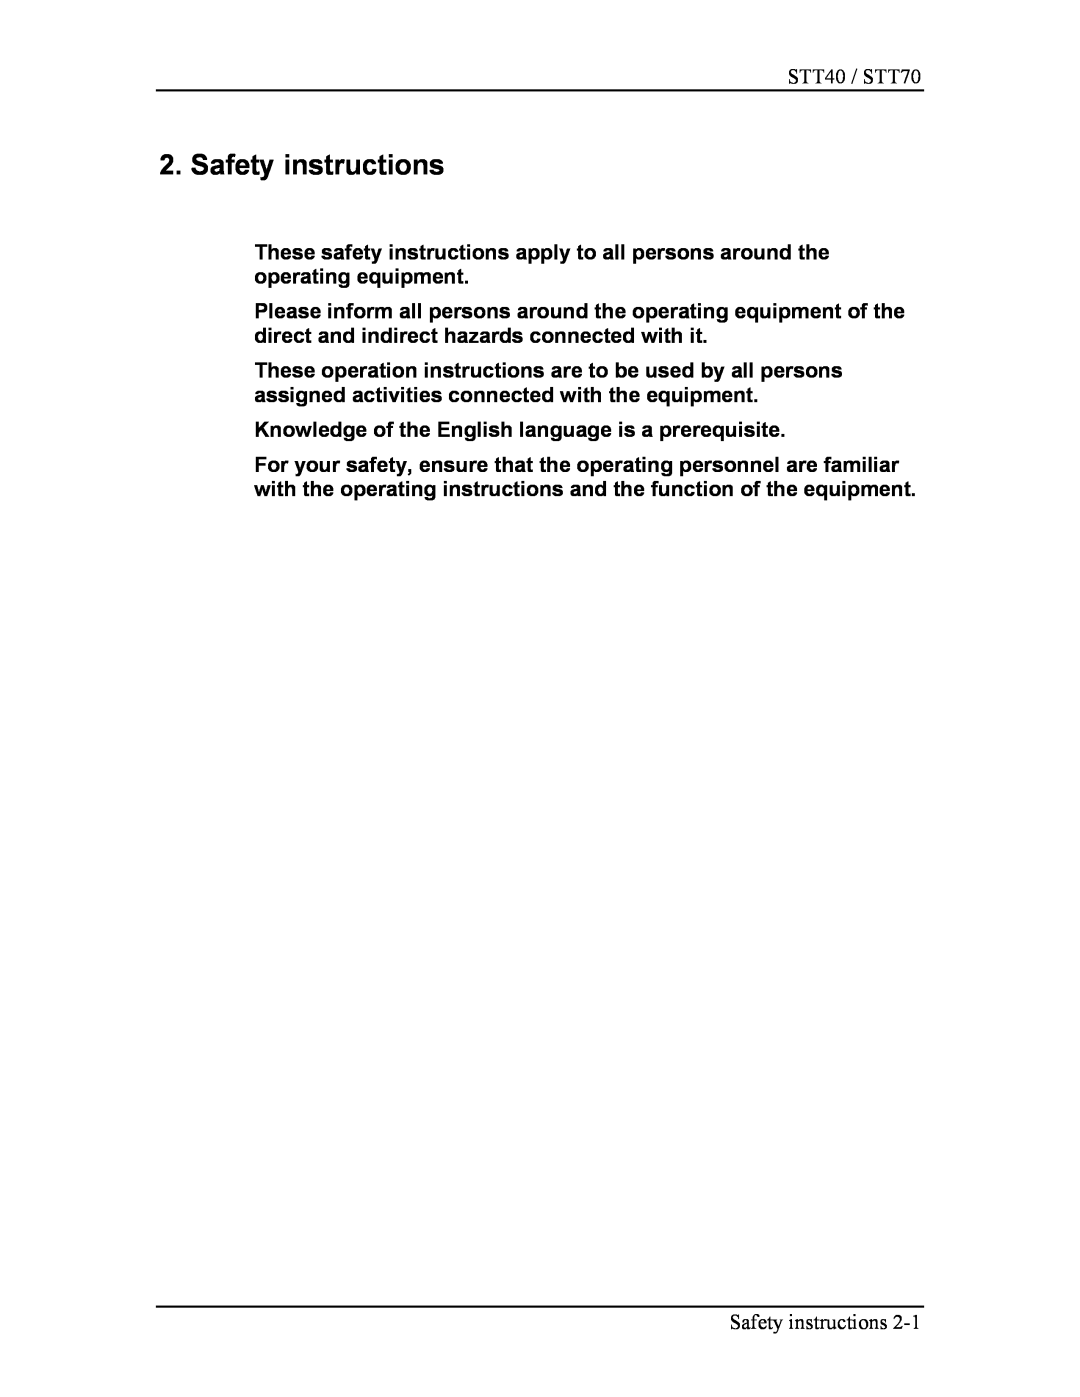 Sterling manual Safety instructions, STT40 / STT70 